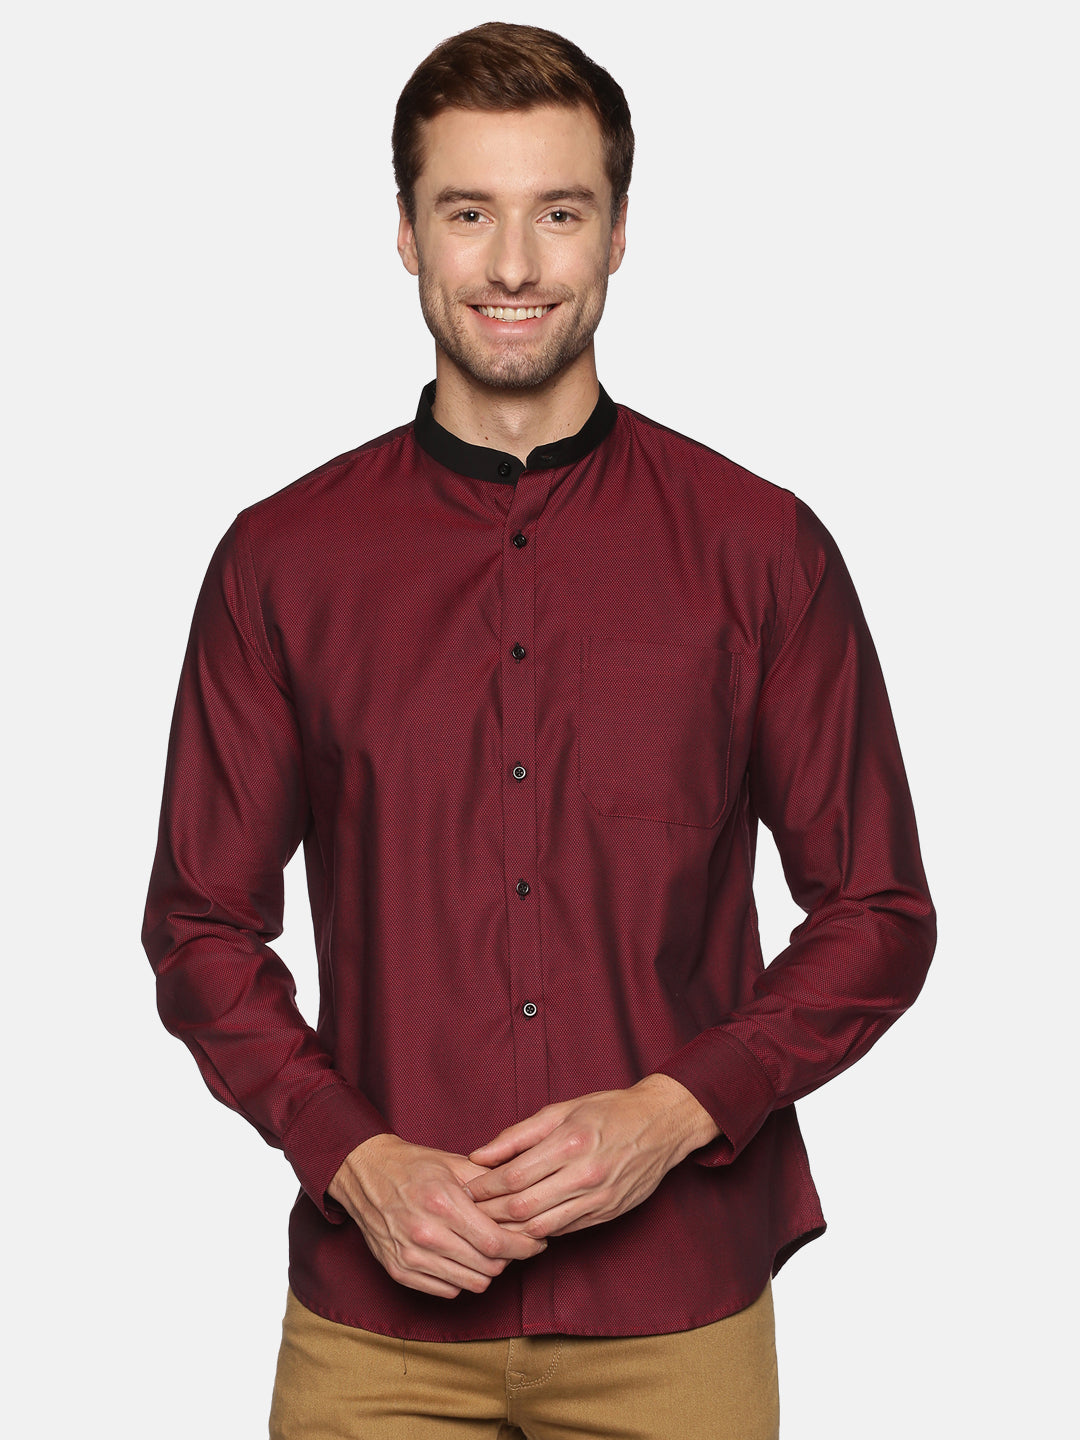 Don Vino Men's Maroon Solid Full Sleeve Formal Shirts